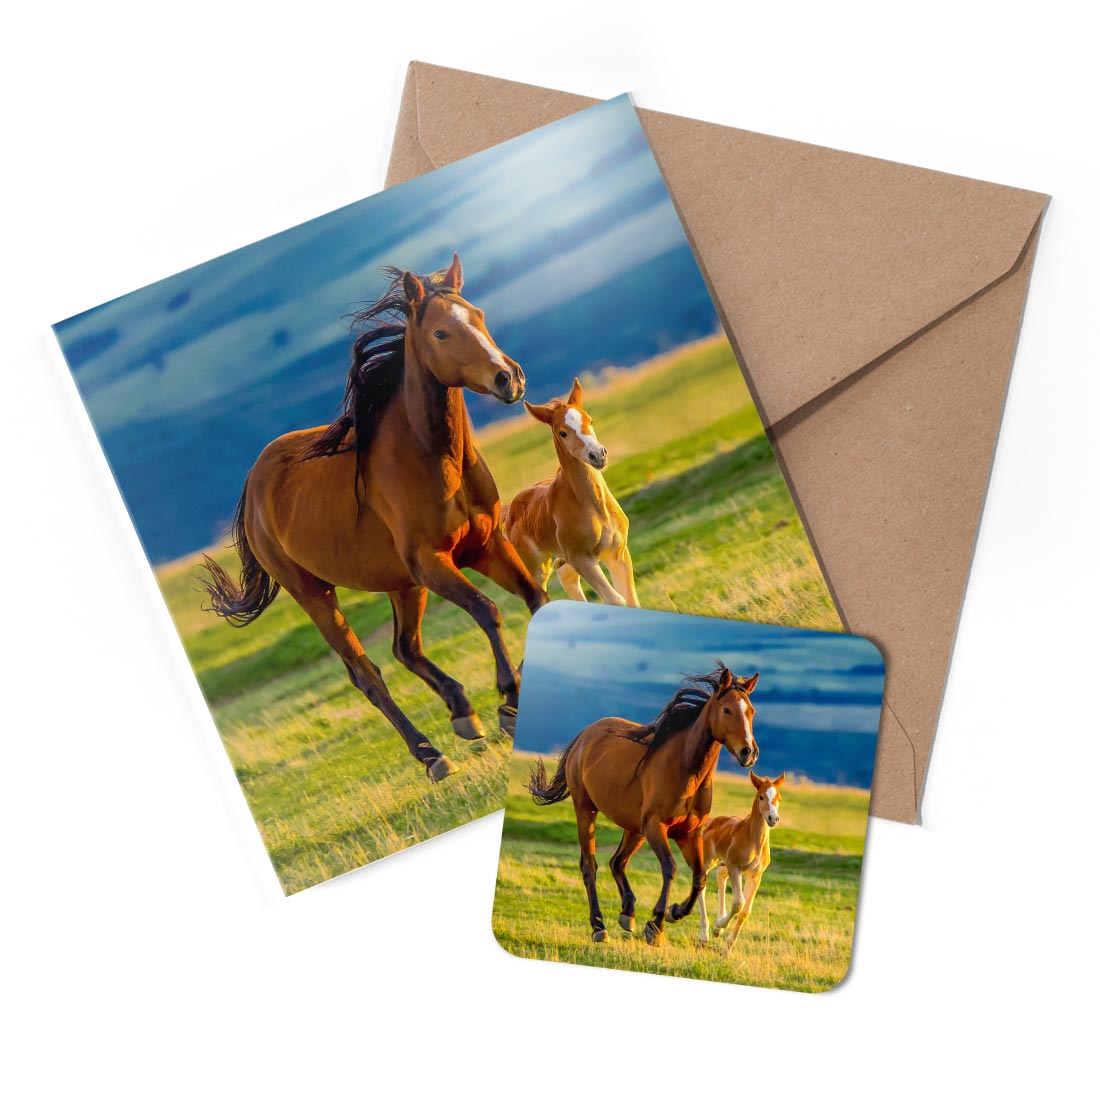 1 x Greeting Card & Coaster Set - Bay Horse & Foal Baby Animal Horses #50201